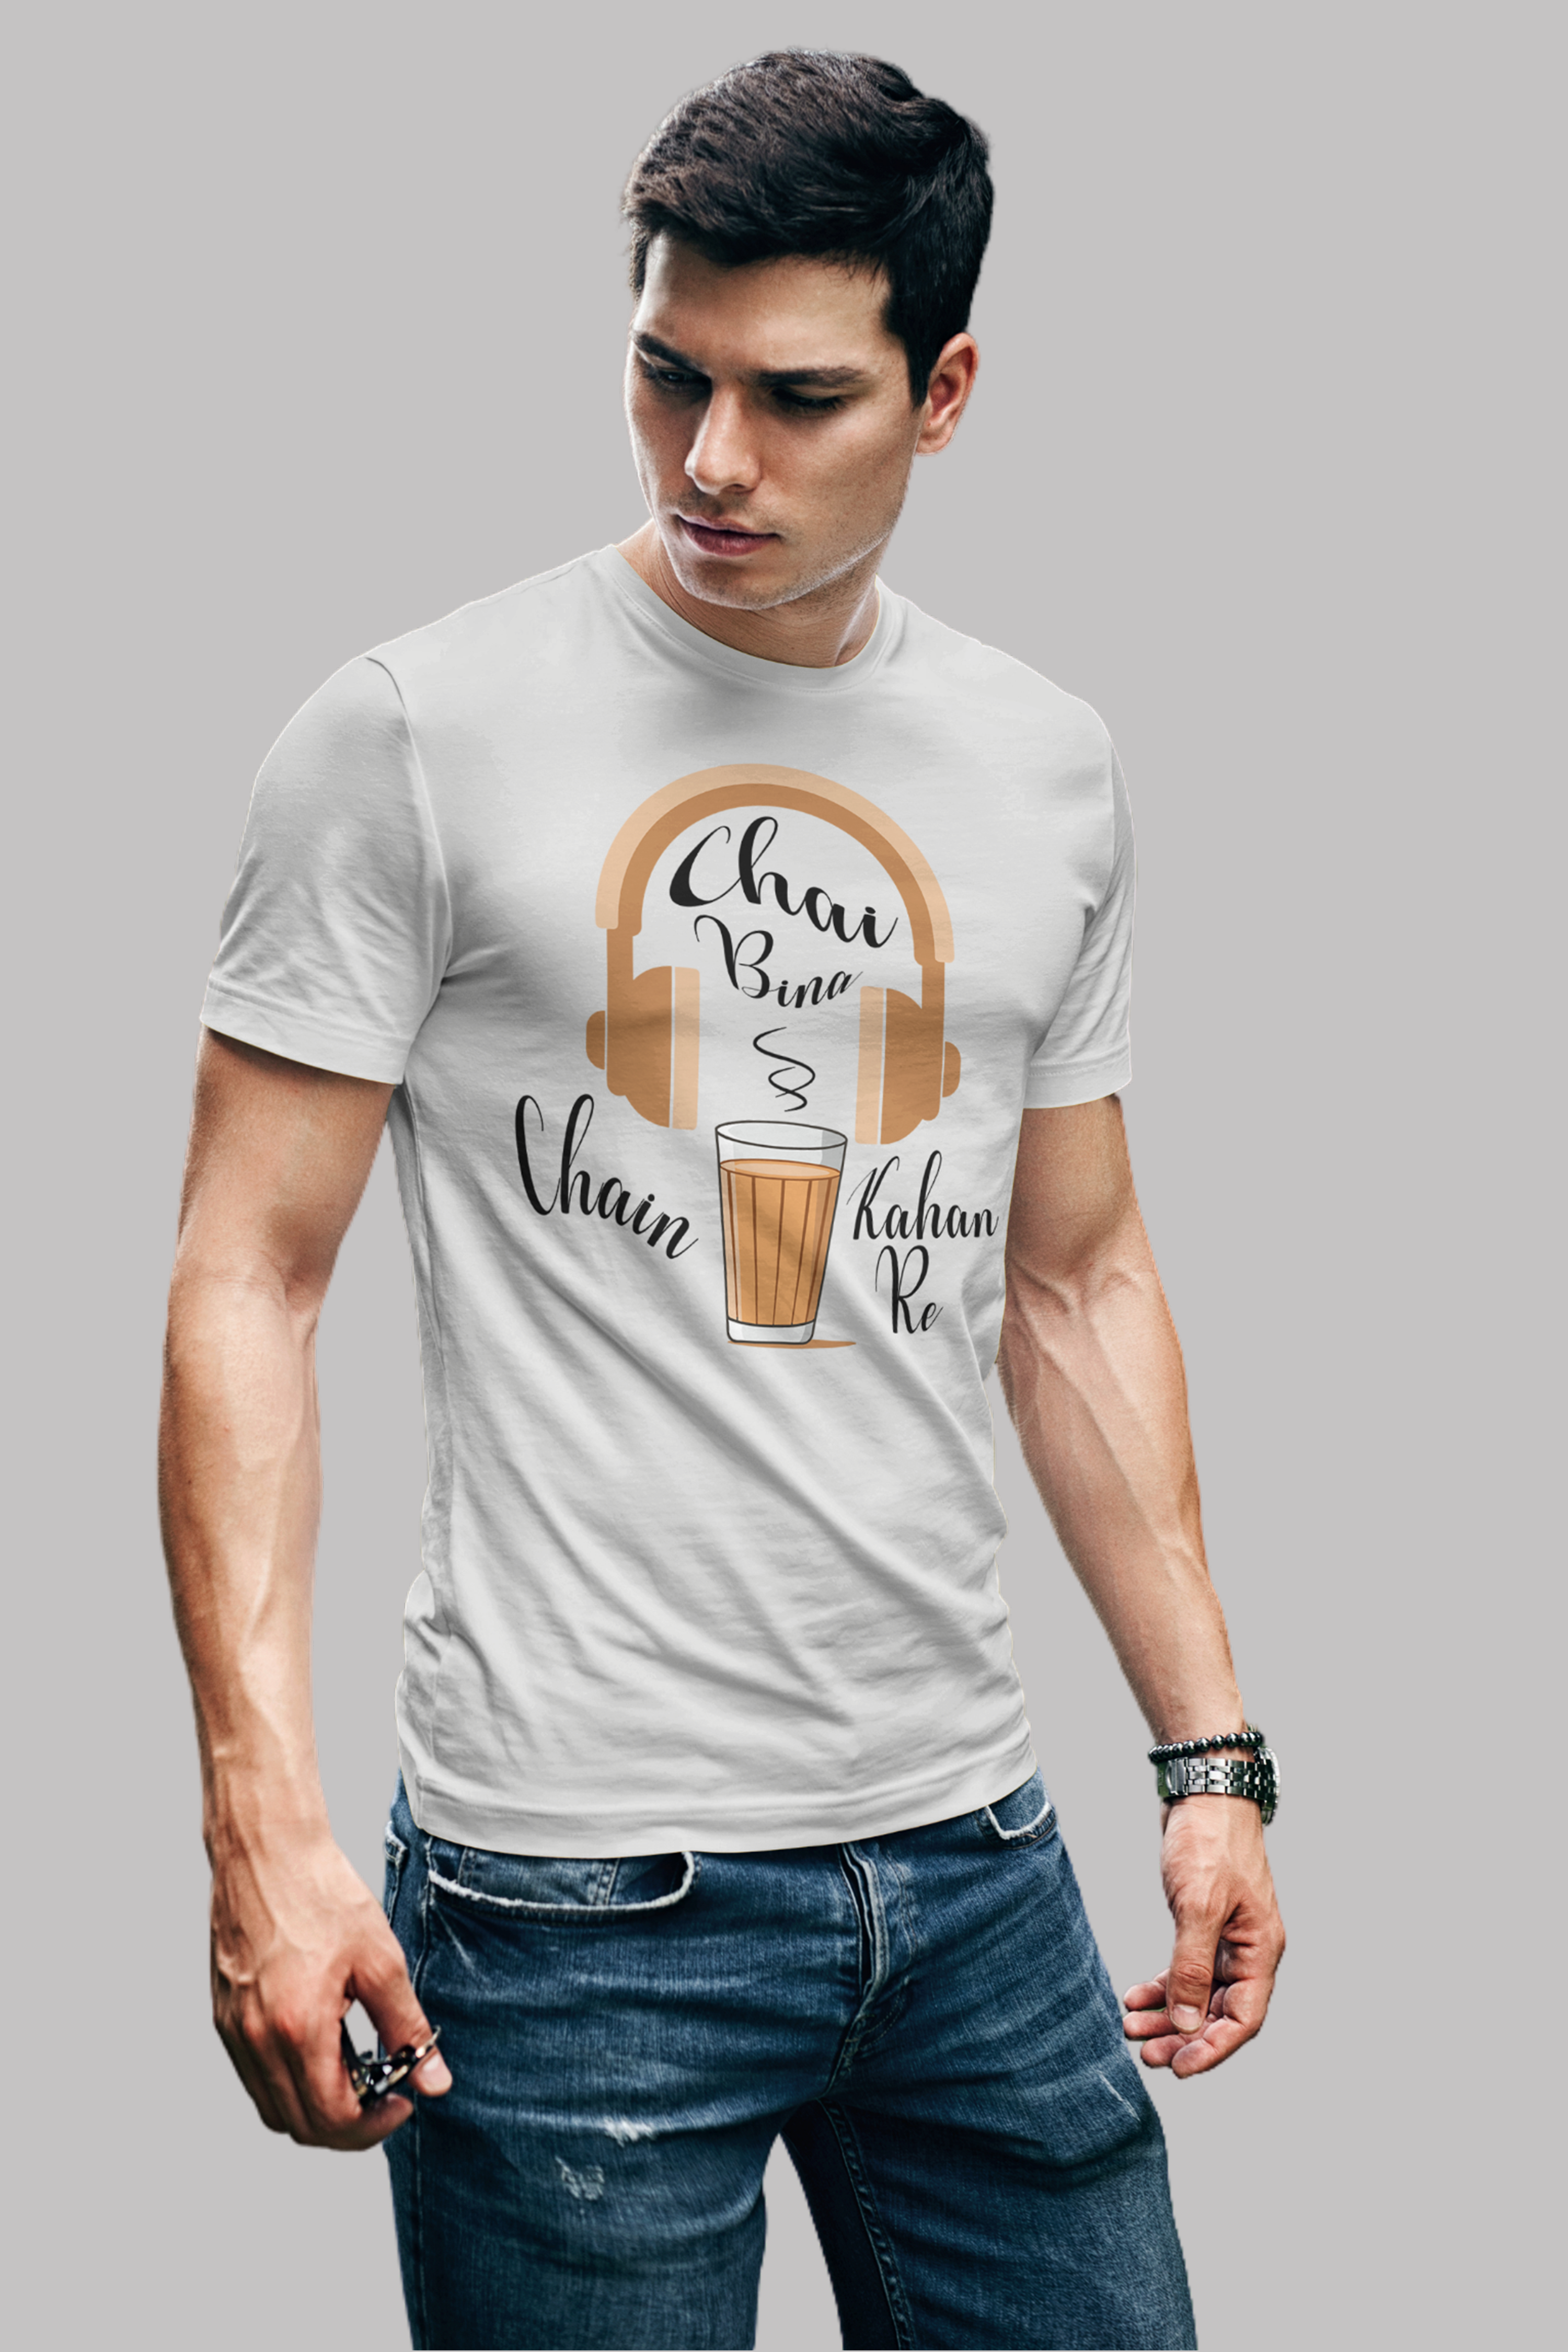 Chai bina chain kaha re Printed Half Sleeve Premium Cotton T-shirt For Men